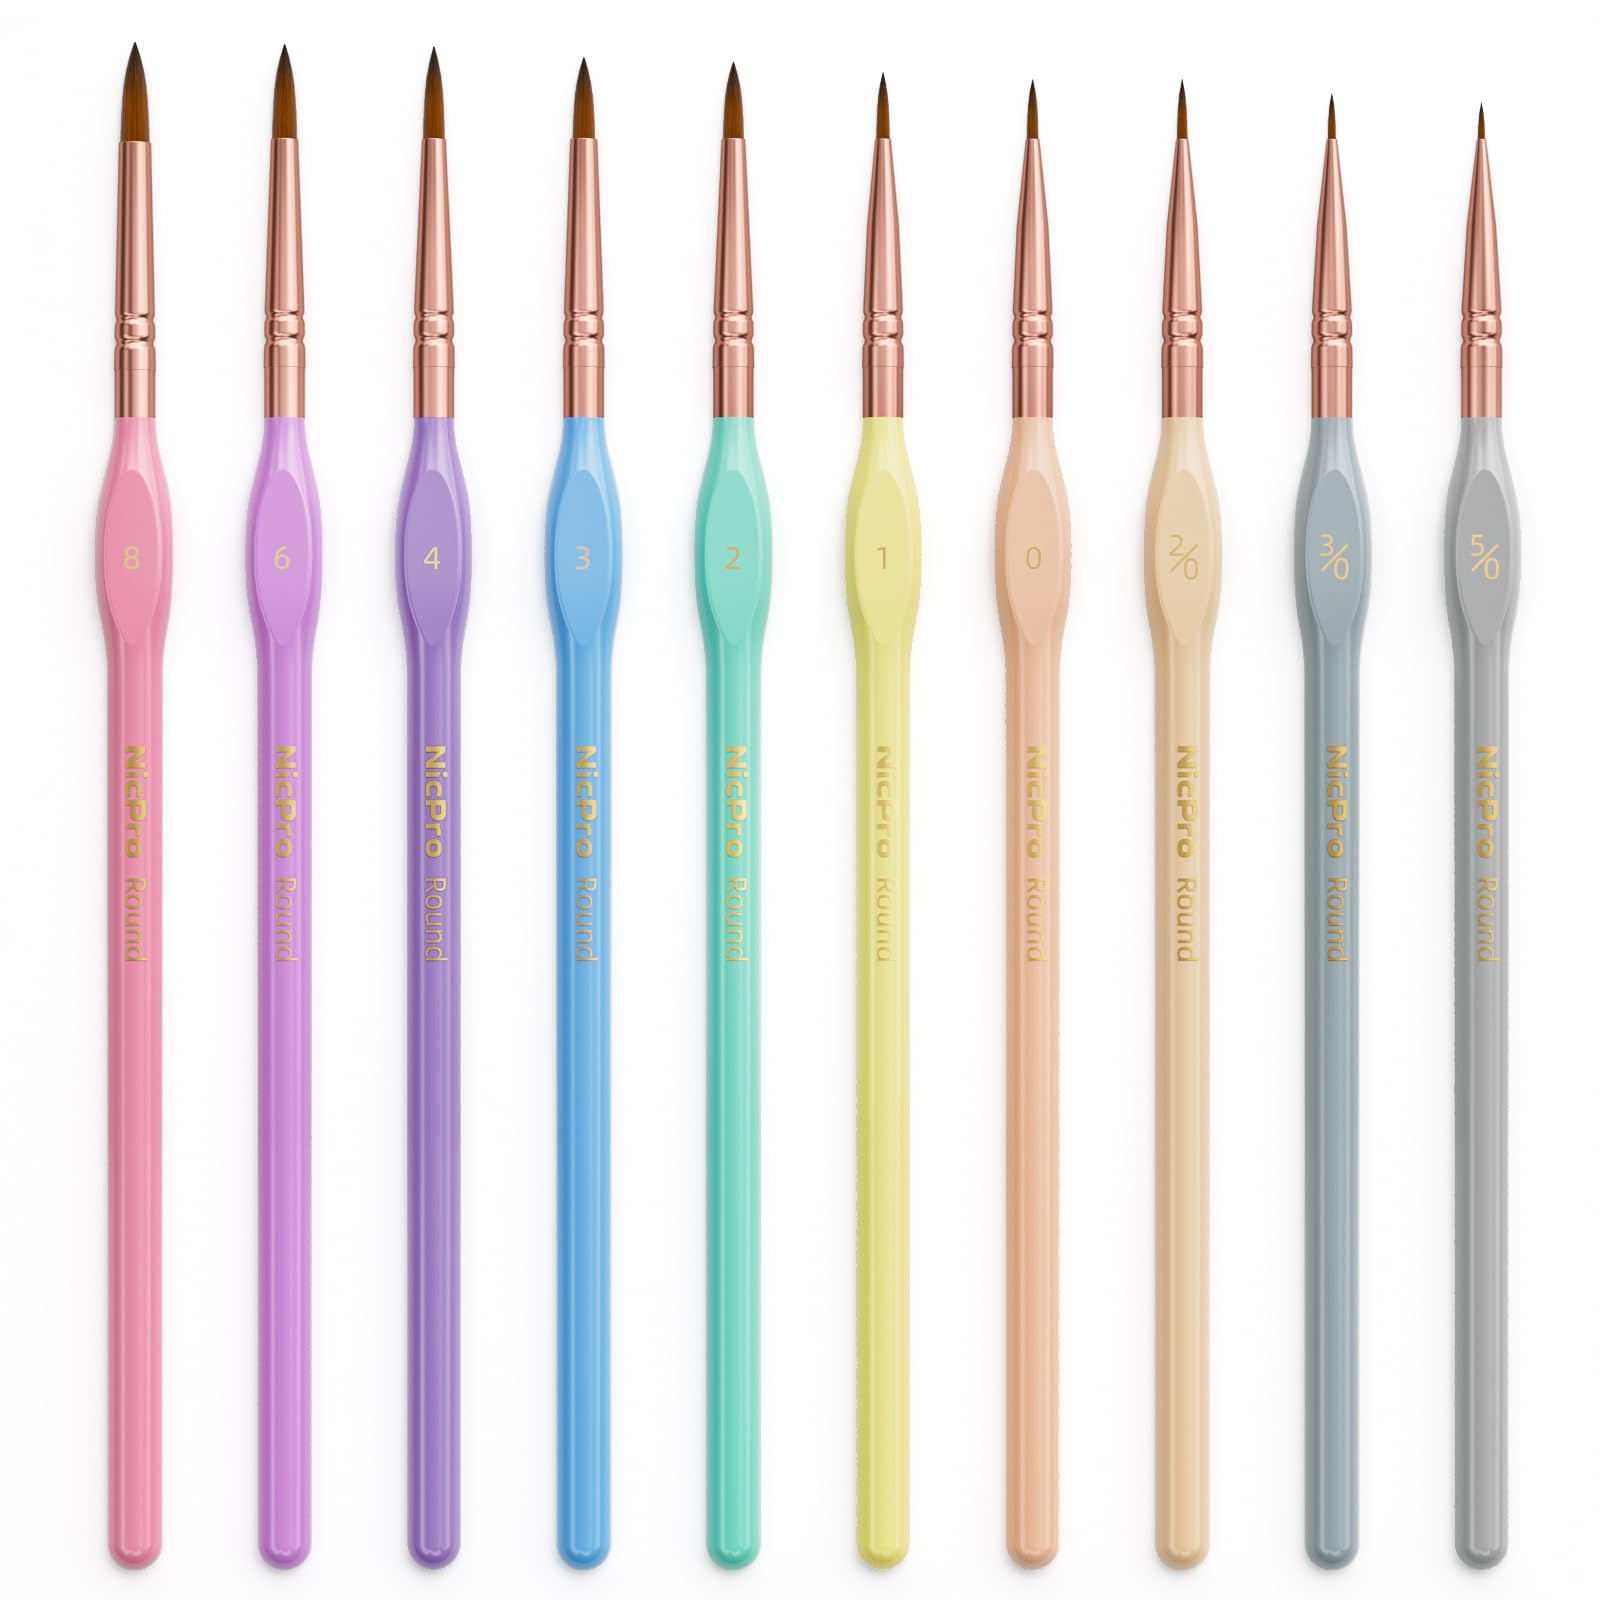 10pcs Small Fine Tip Paintbrushes Micro Detail Paint Brush Set